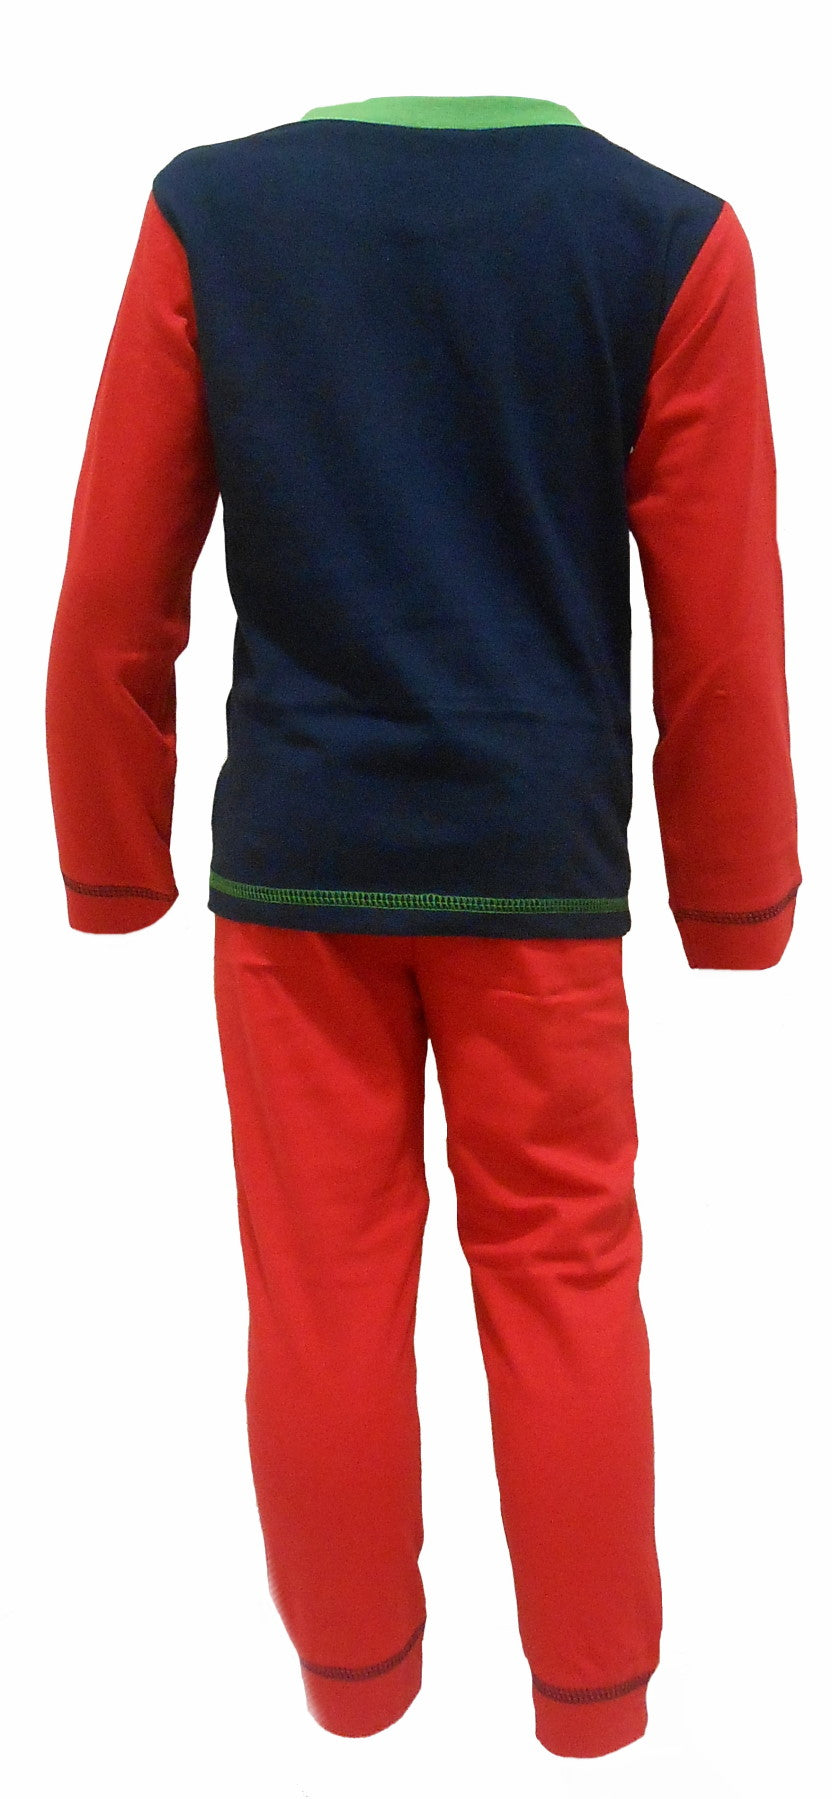 PJ Masks "Hero" Boys Pyjamas 18-24 Months